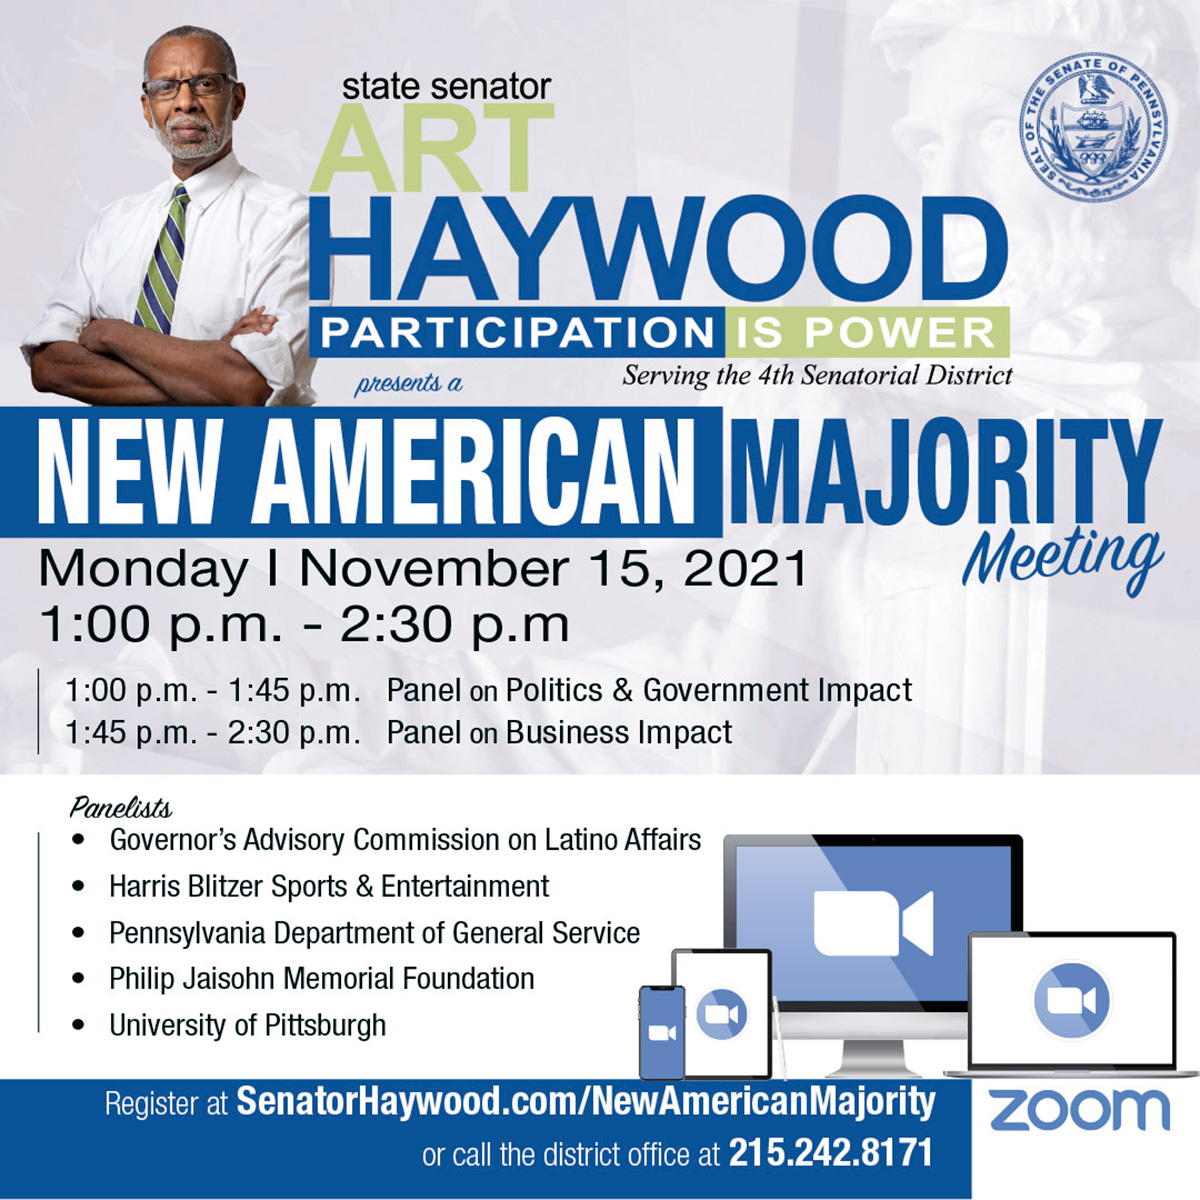 New American Majority Meeting - November 15, 2021